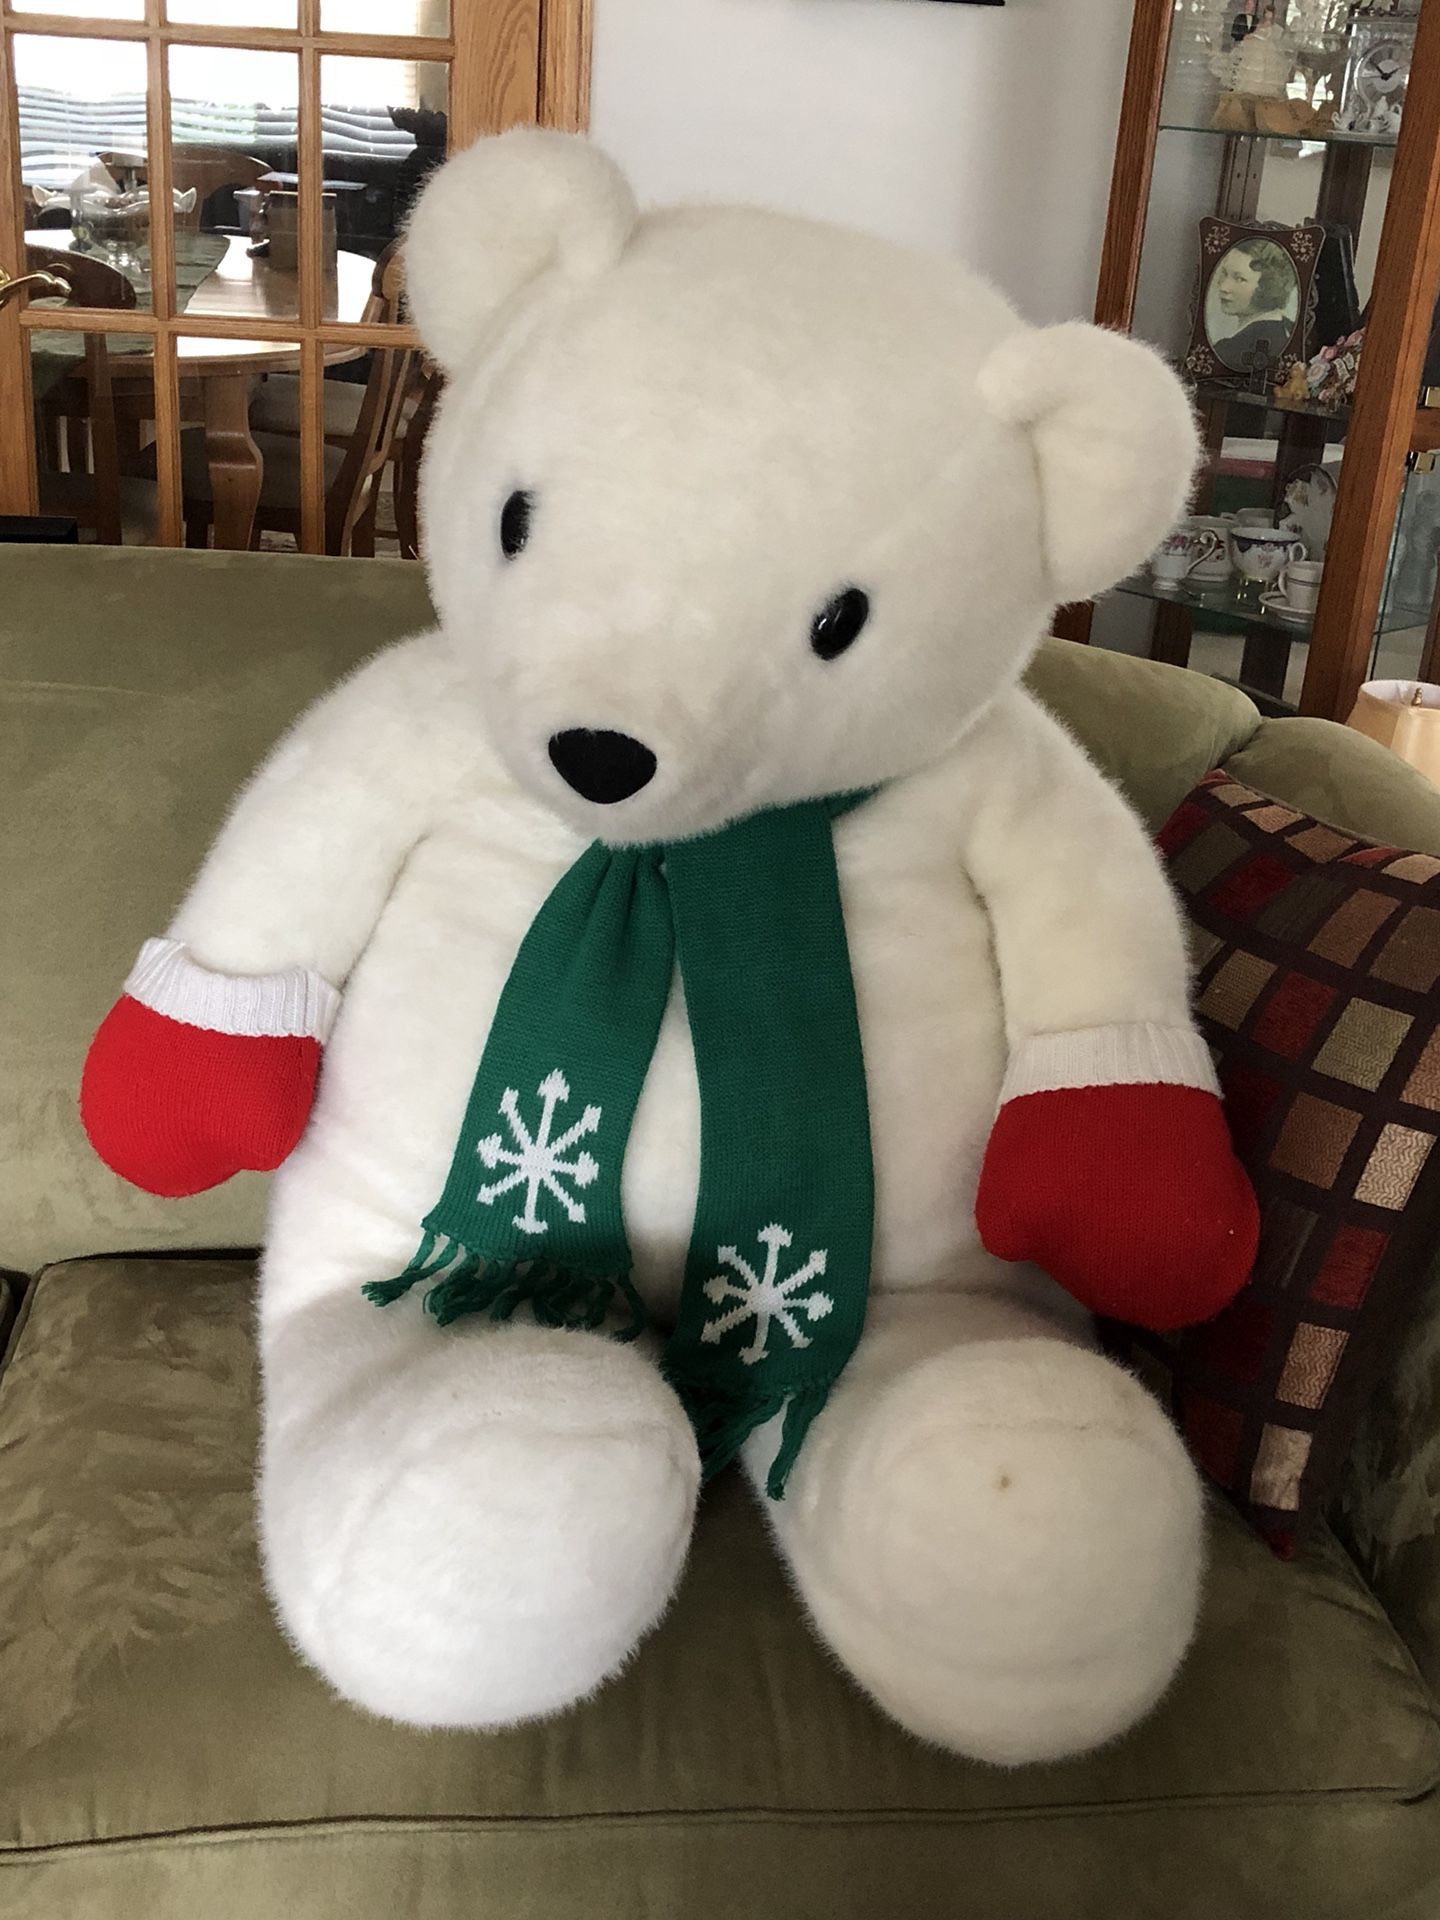 Large stuffed bear about 3 1/2 foot tall